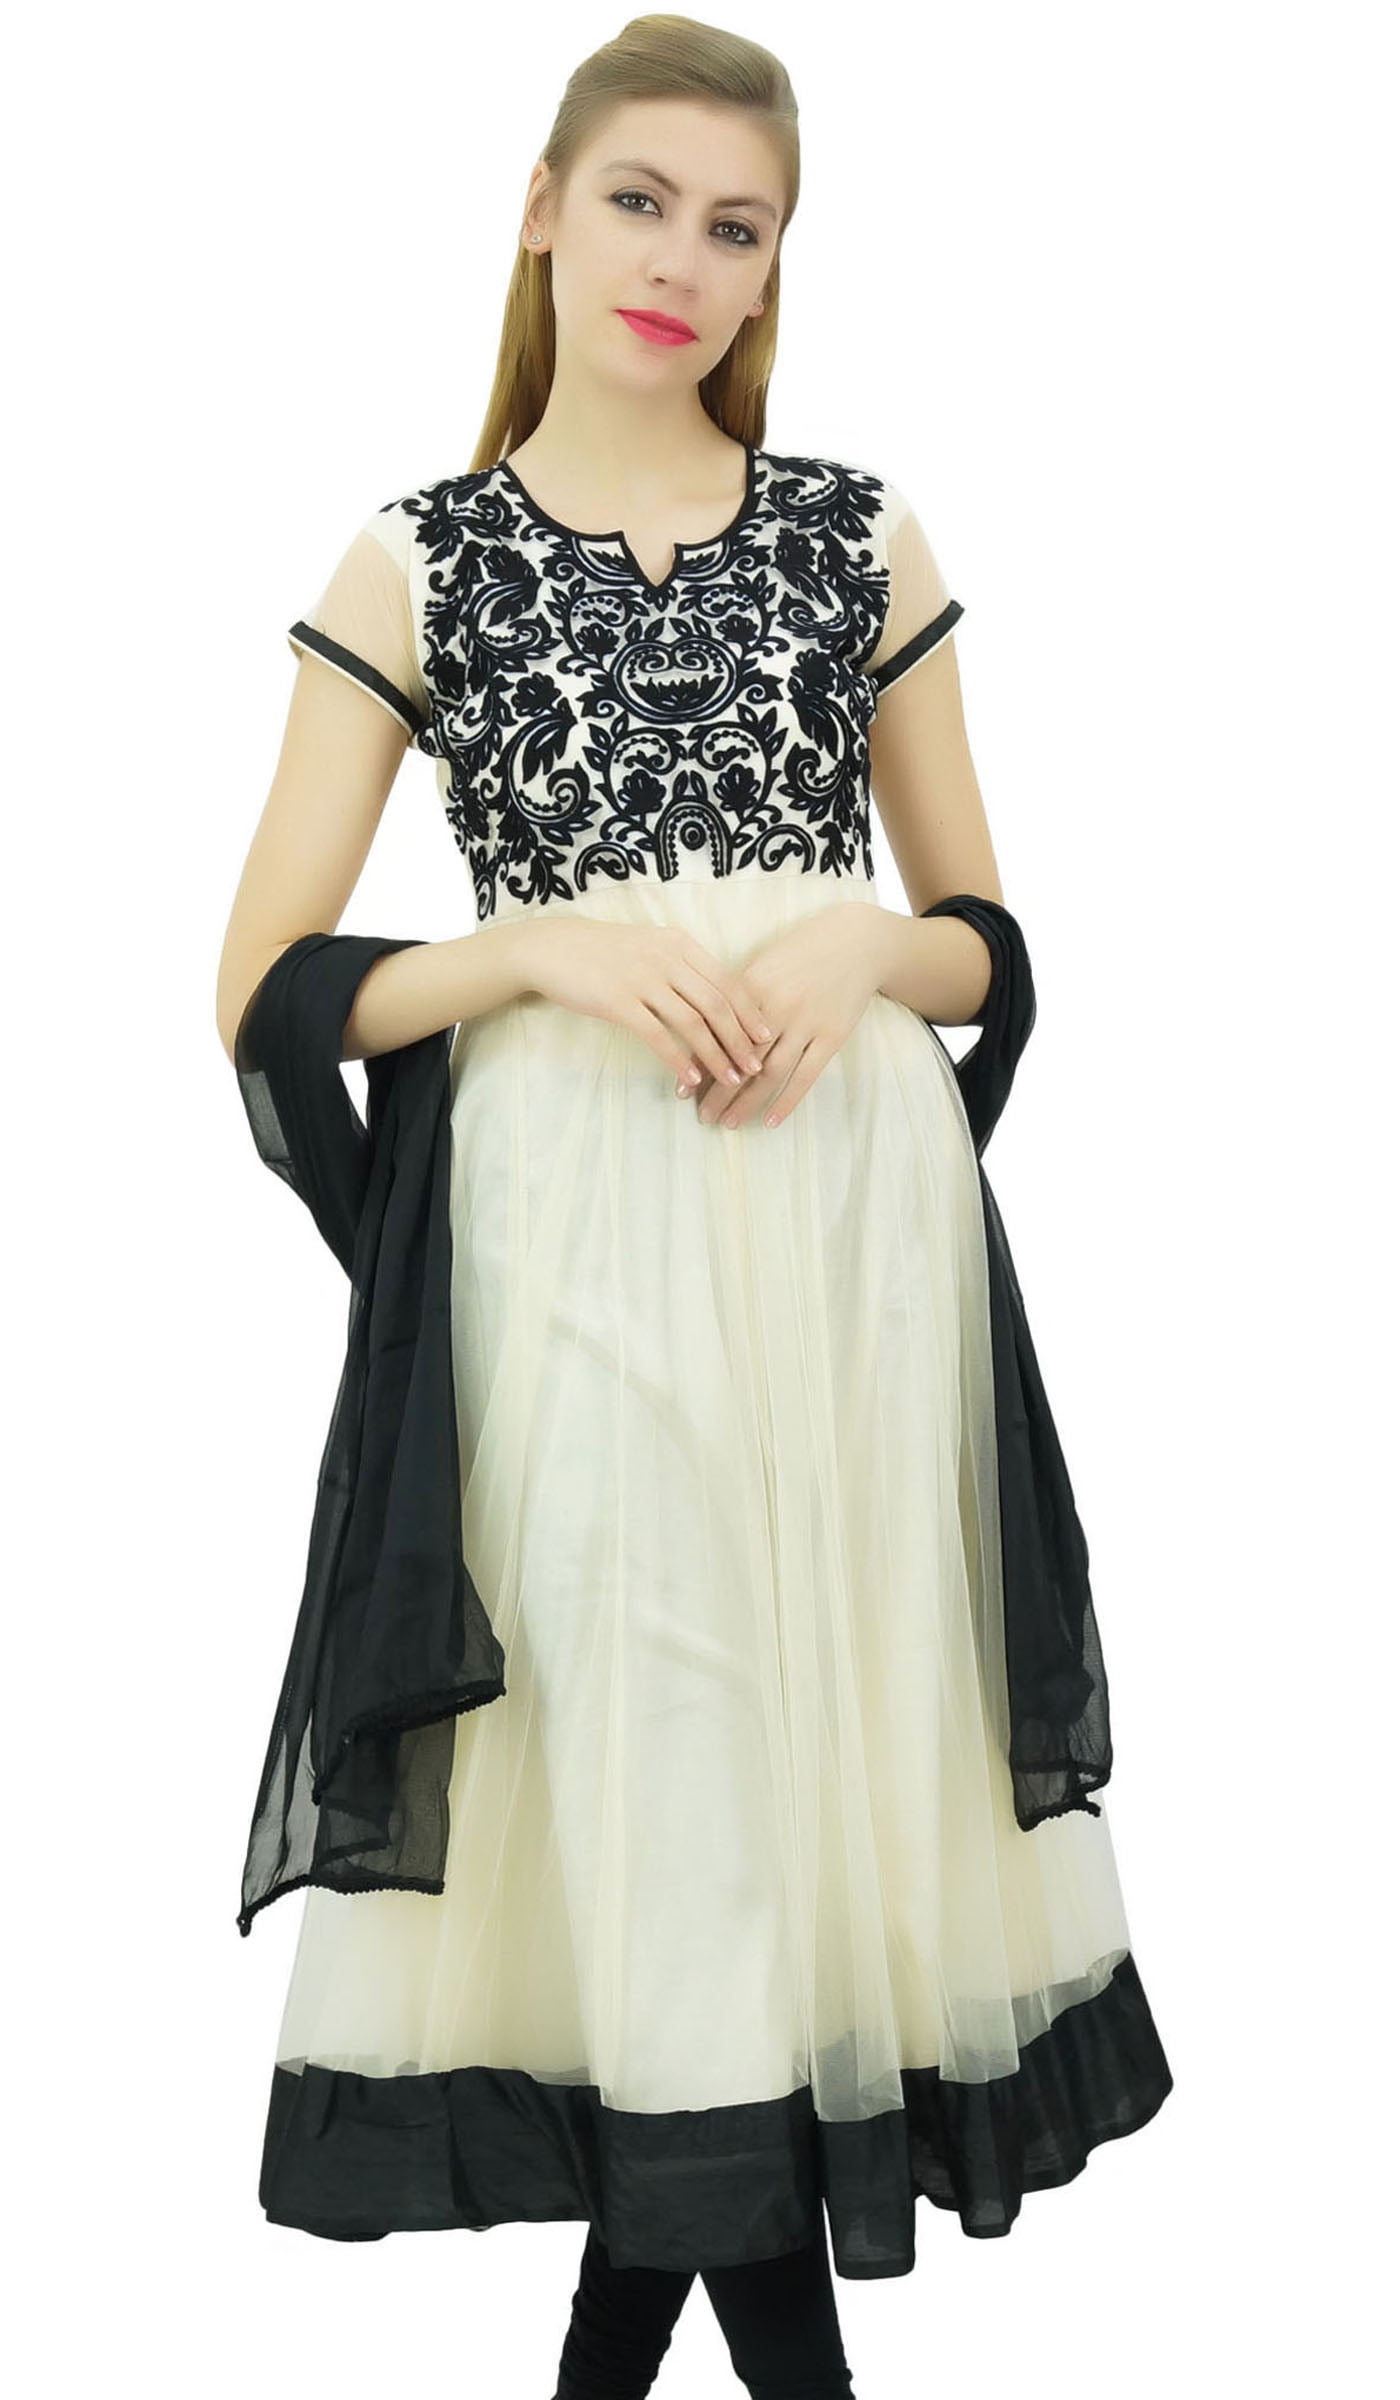 Indian Knots Festive Off White Anarkali Dress with Dupatta : Amazon.in:  Fashion